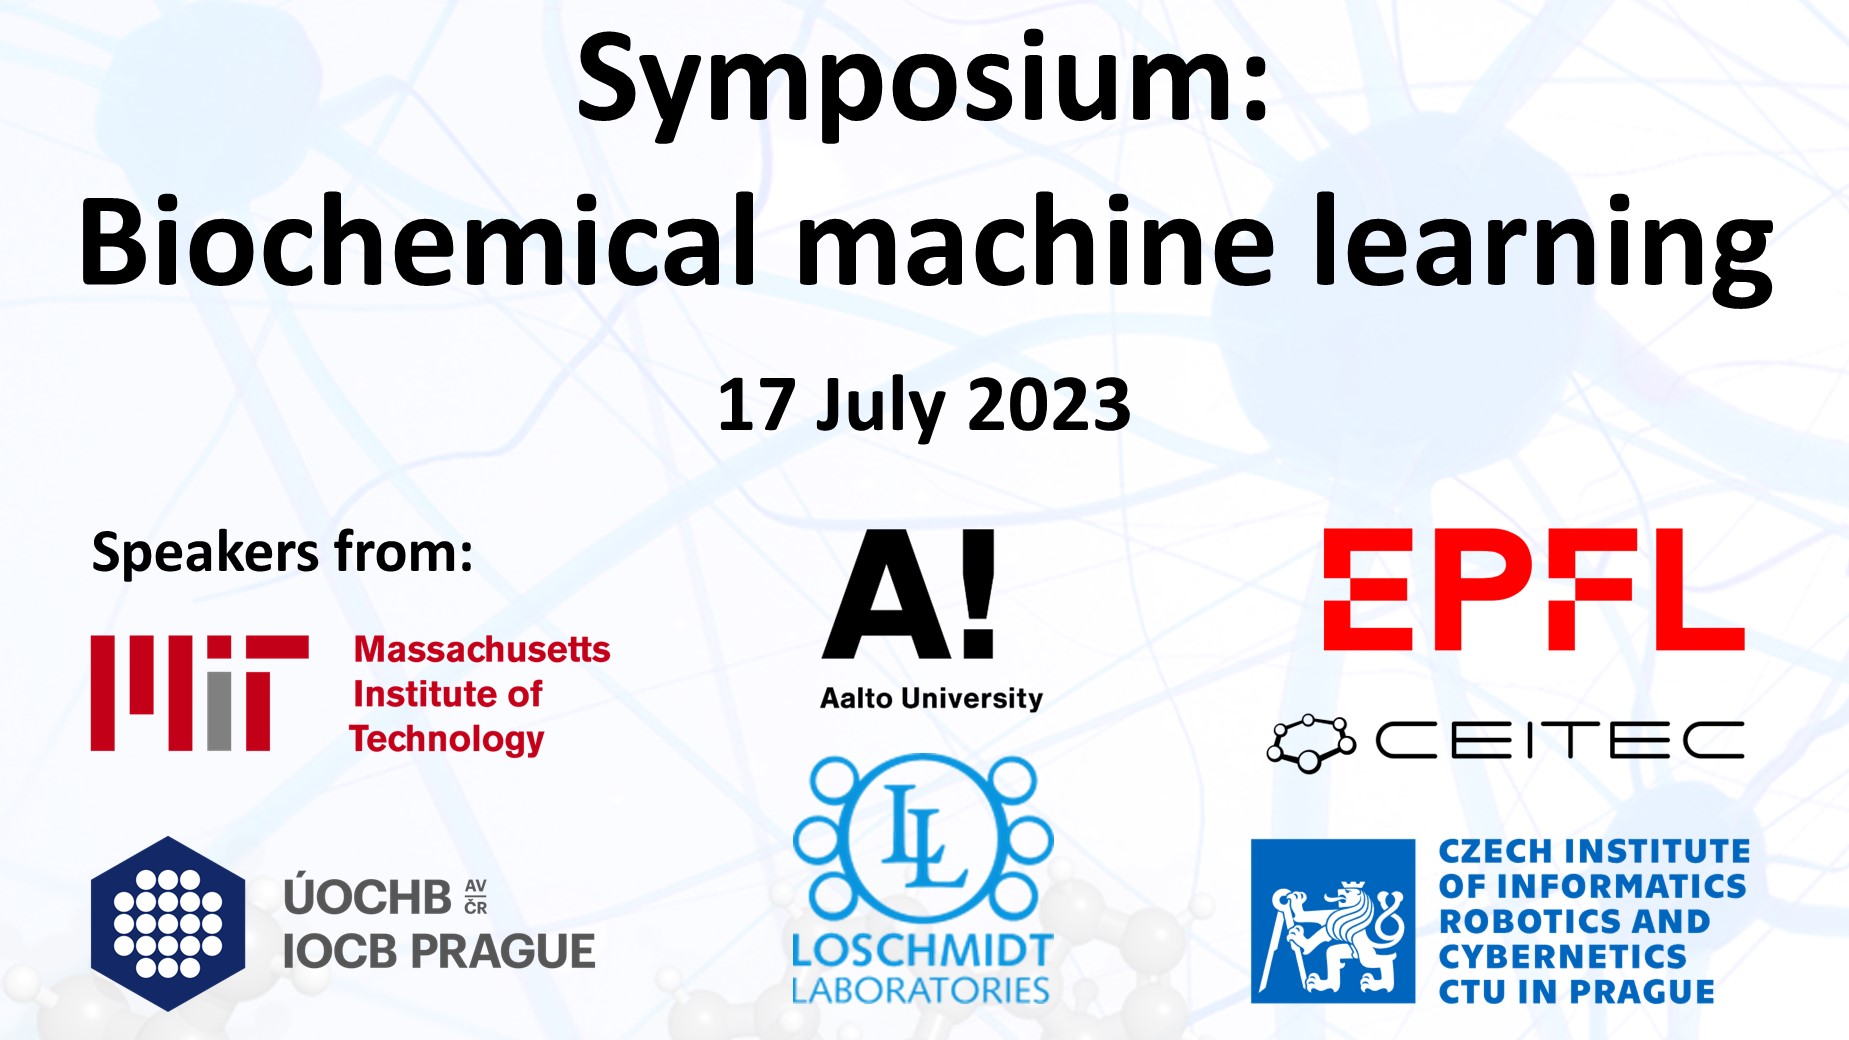 Symposium: Biochemical machine learning